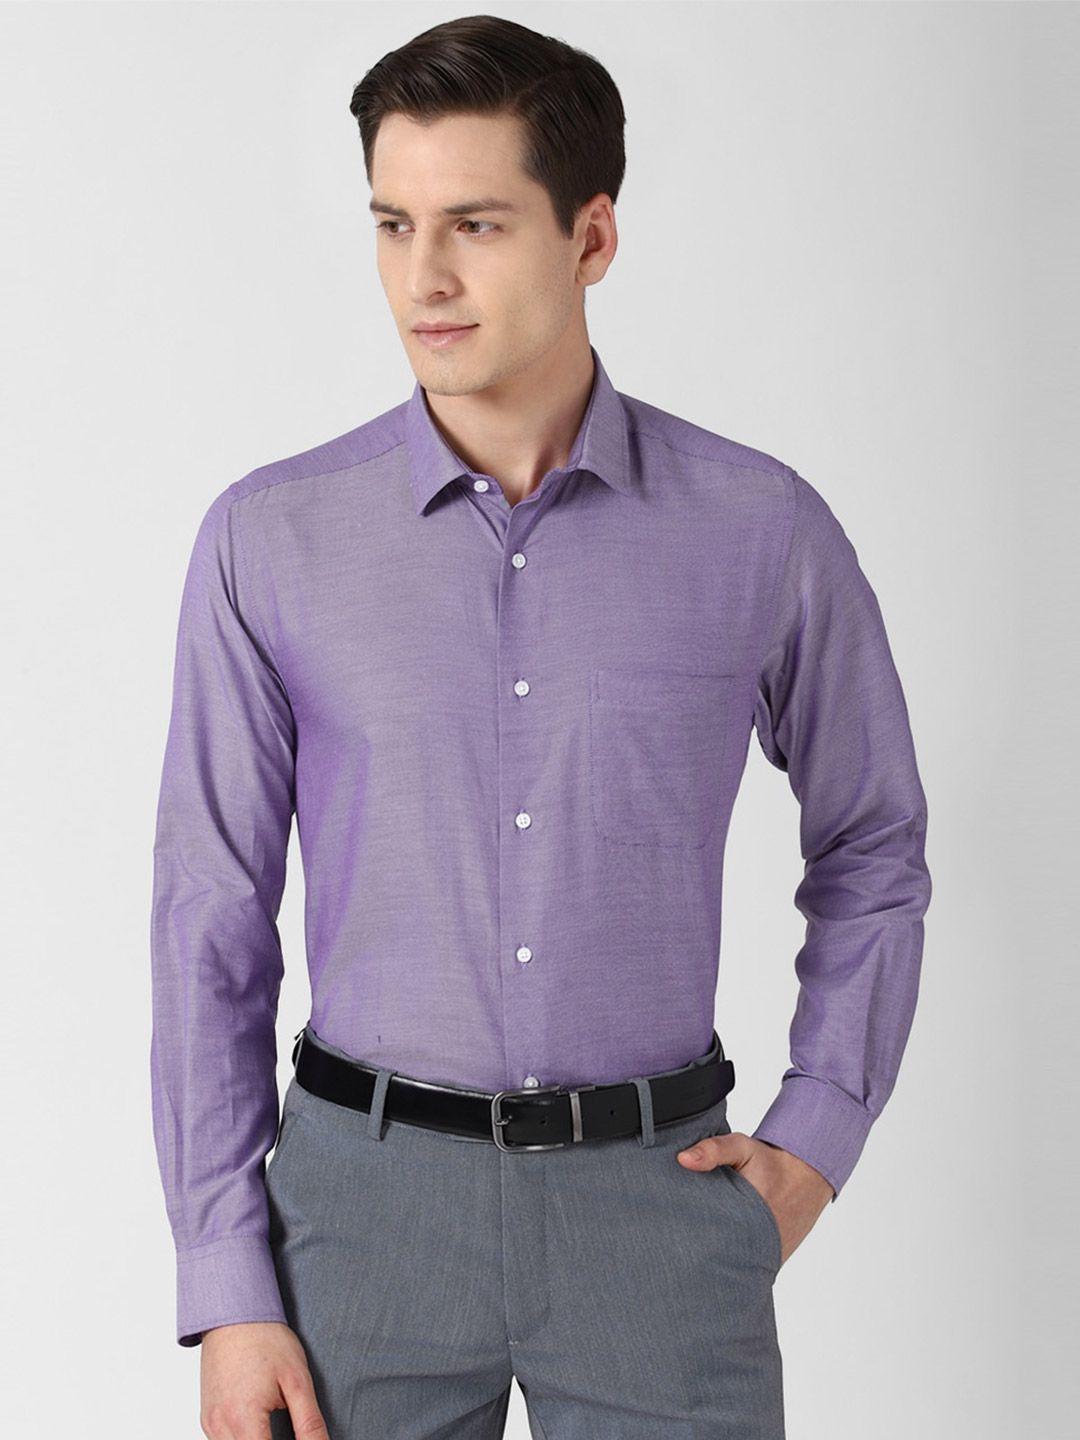 peter england men purple formal shirt